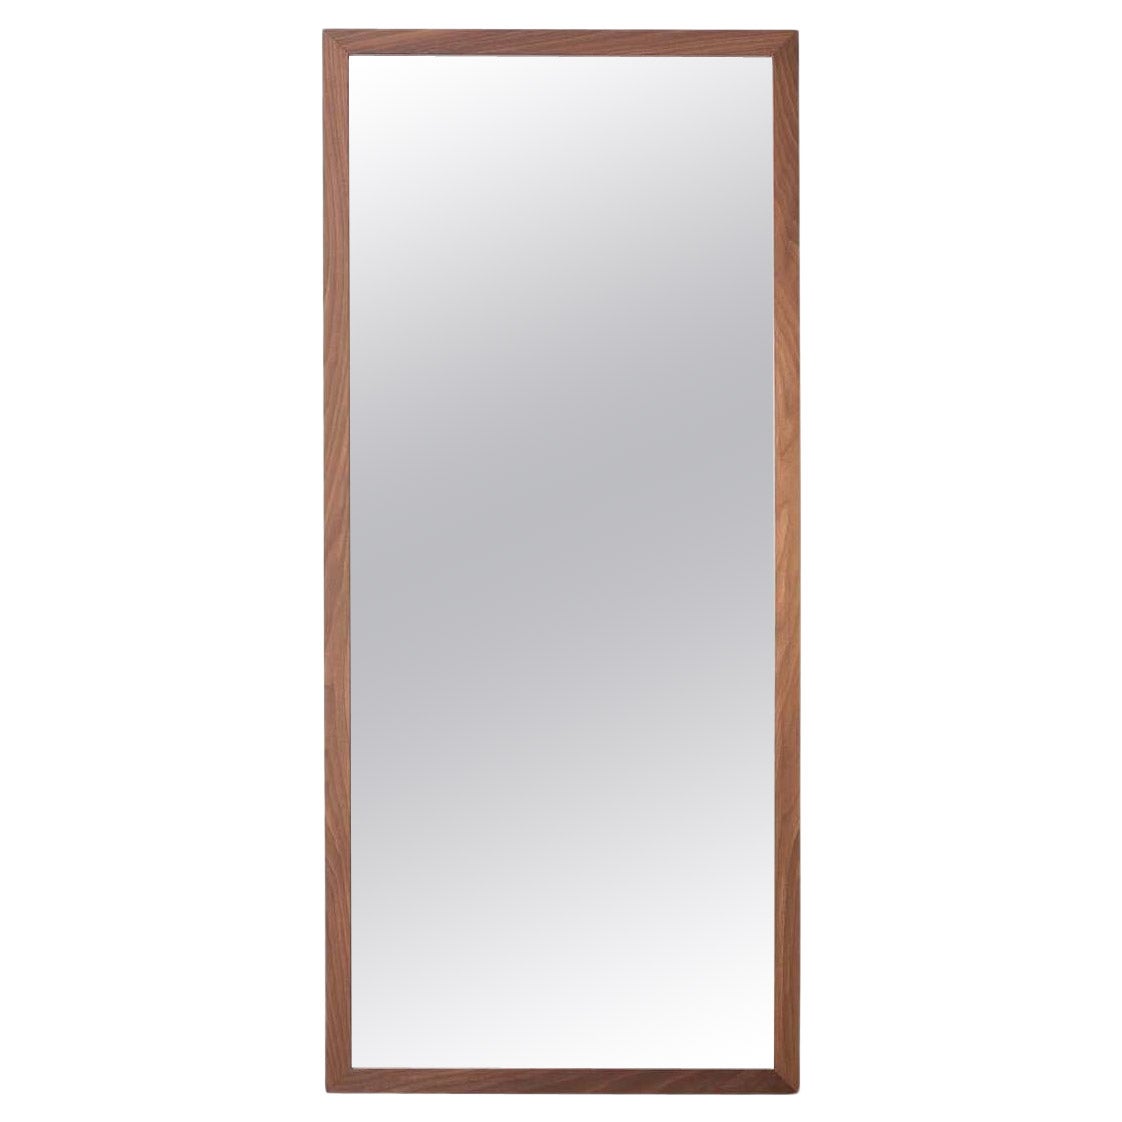 Specchio Rettangolare 2018, miroir rectangulaire 2018 en vente